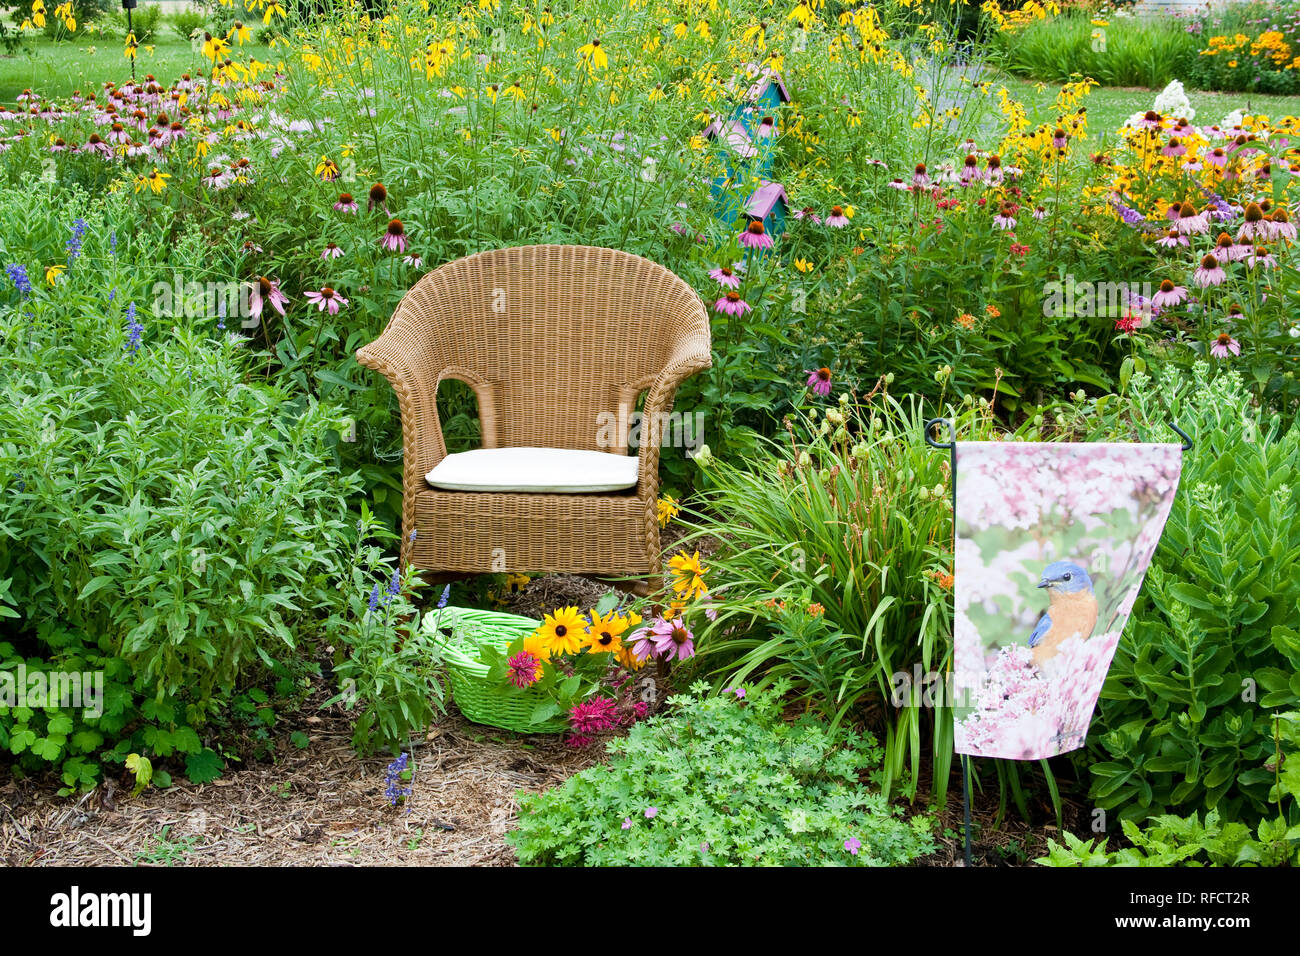 63821-206.07  Wicker chair with basket, garden flag and birdhouse in flower garden with Black-eyed Susans (Rudbeckia hirta), Purple Coneflowers (Echin Stock Photo